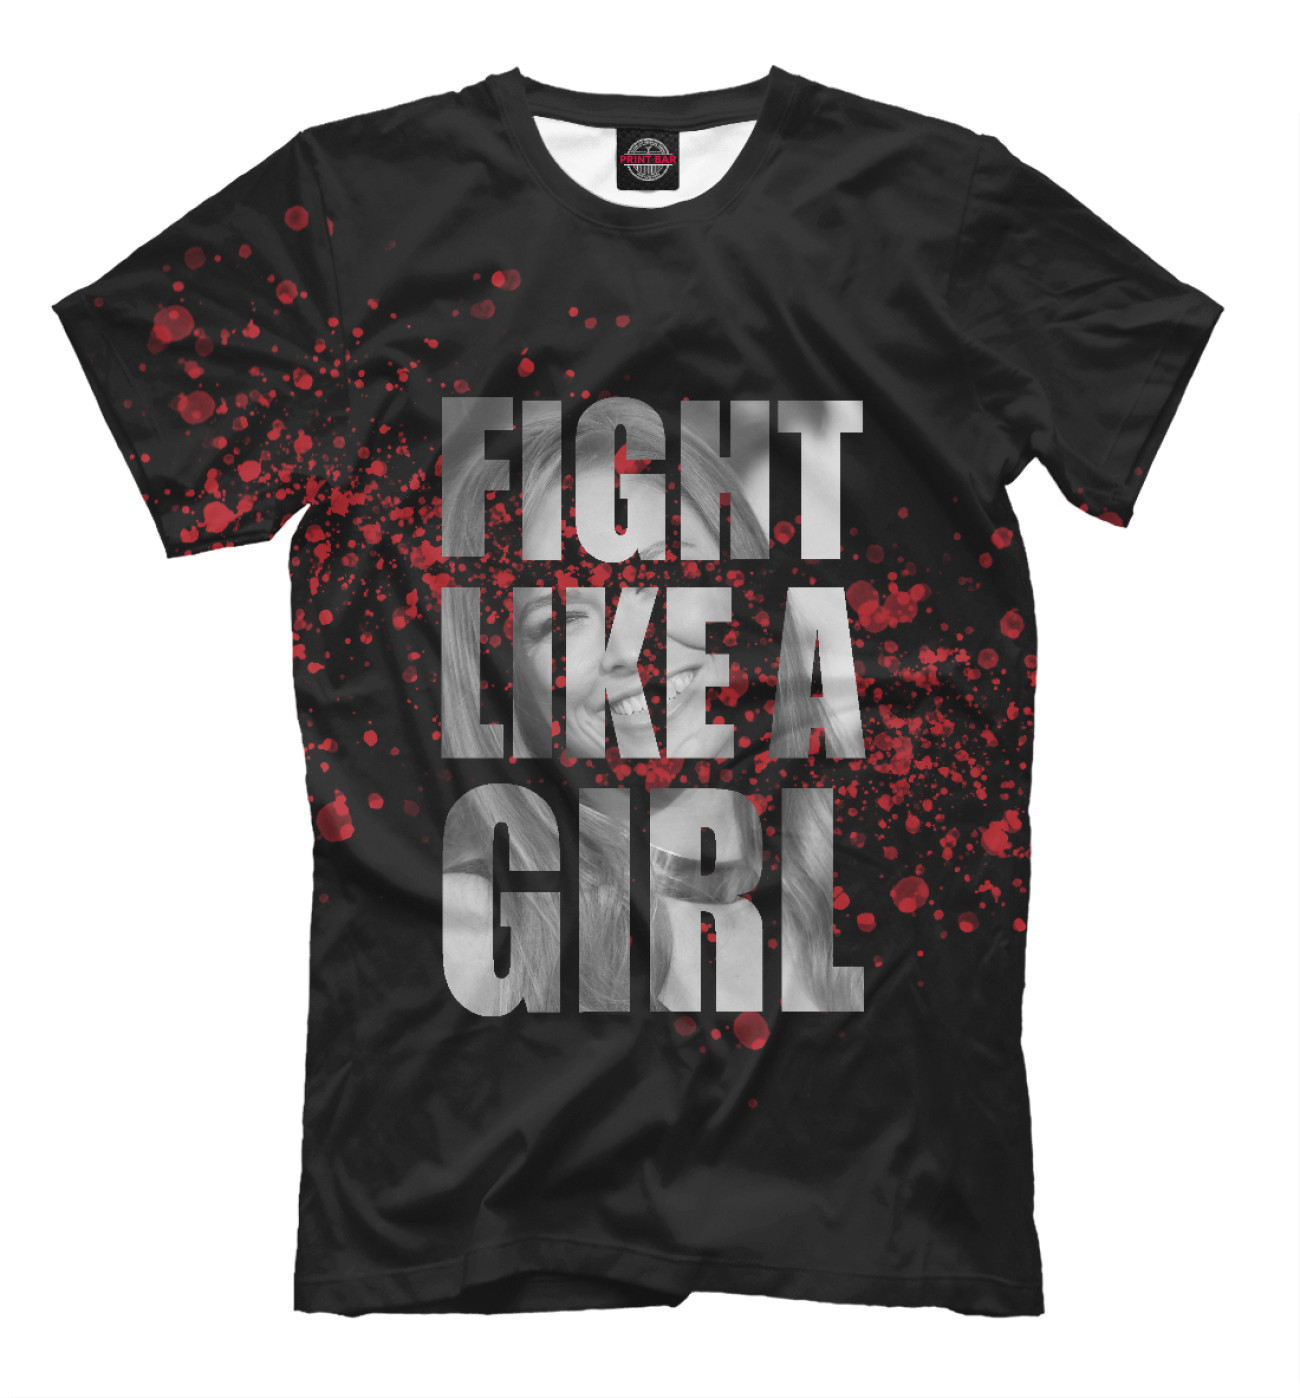 Мужская Футболка Fight like a Girl, артикул: RWS-872047-fut-2